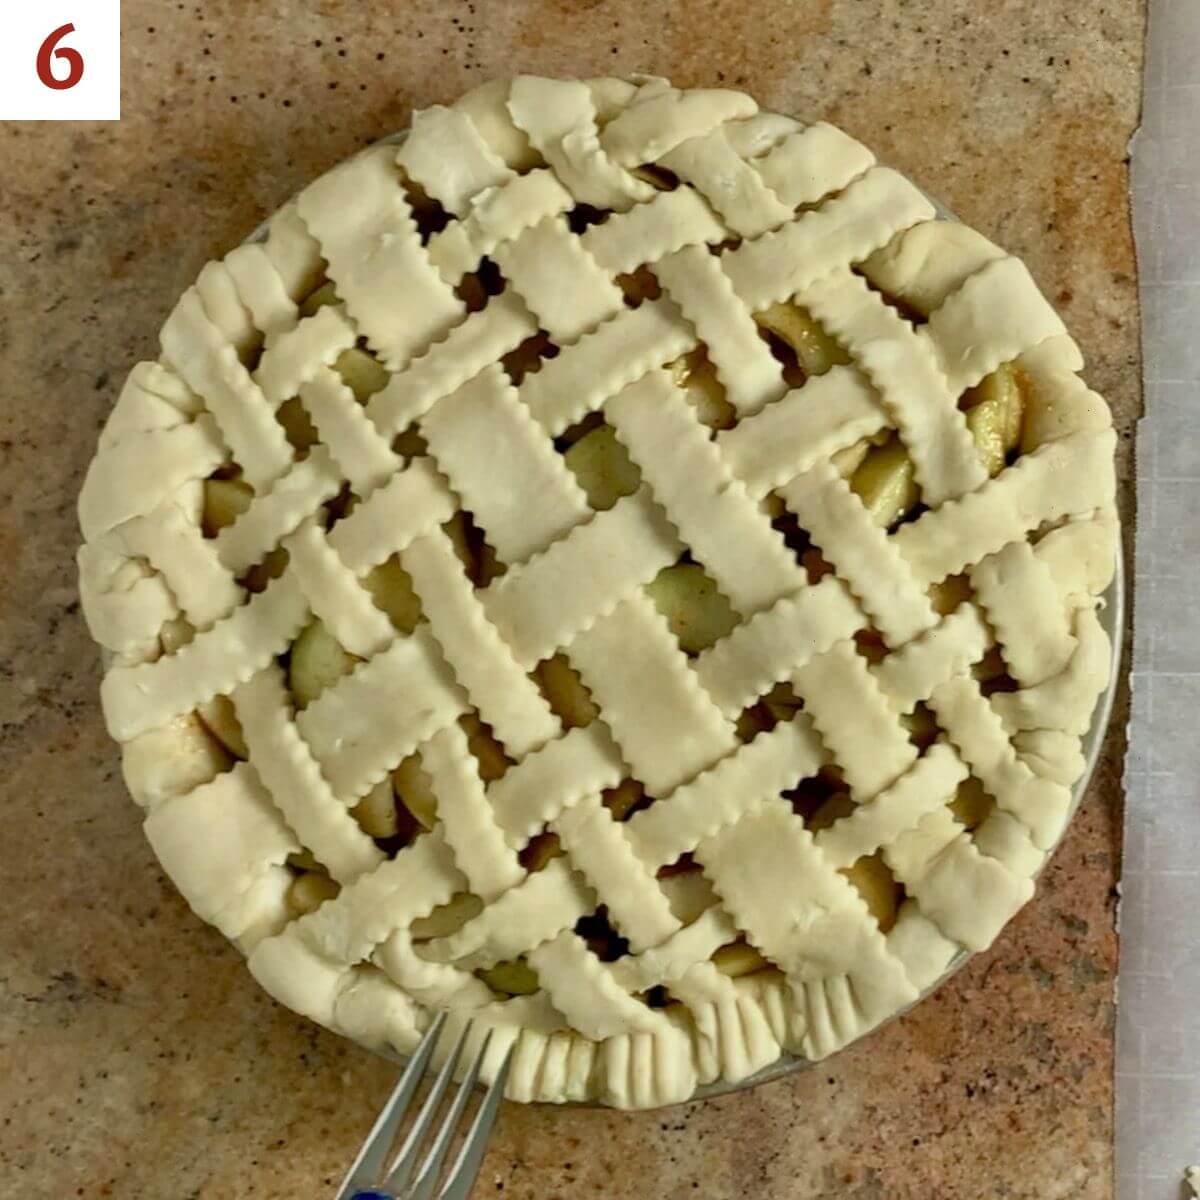 Crimping lattice pie crust edge with a fork.